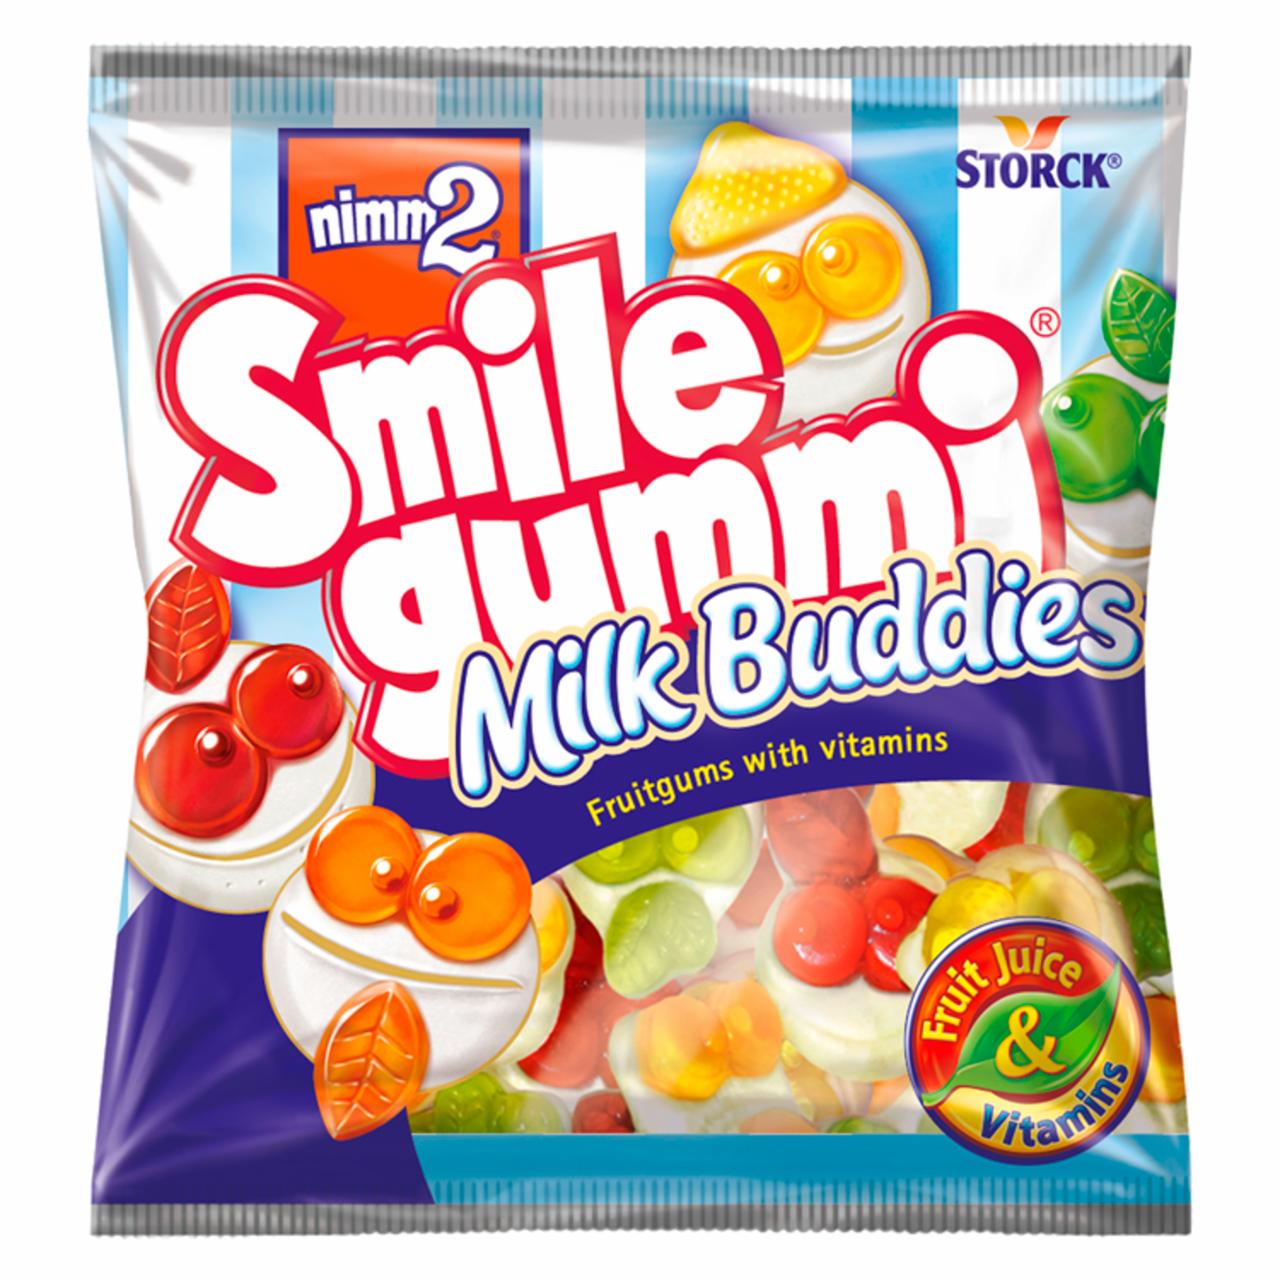 Képek - nimm2 Smilegummi Milk Buddies vegyes gyümölcs ízű gumicukorka 90 g